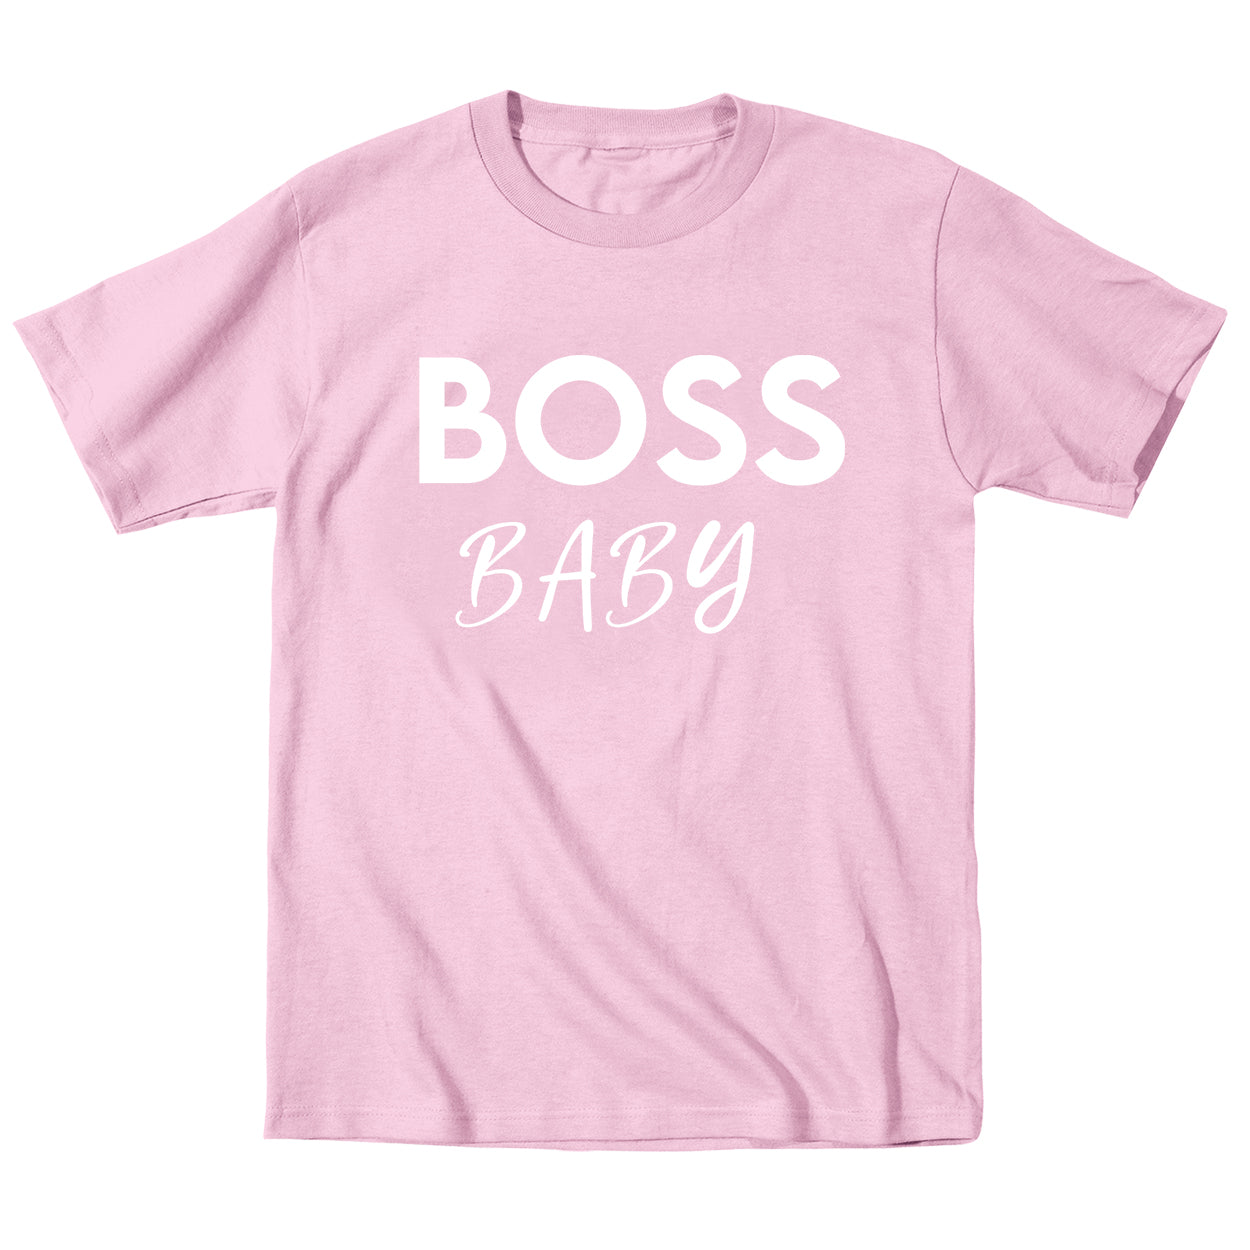 Boss Baby Tshirt - Donkey Tees